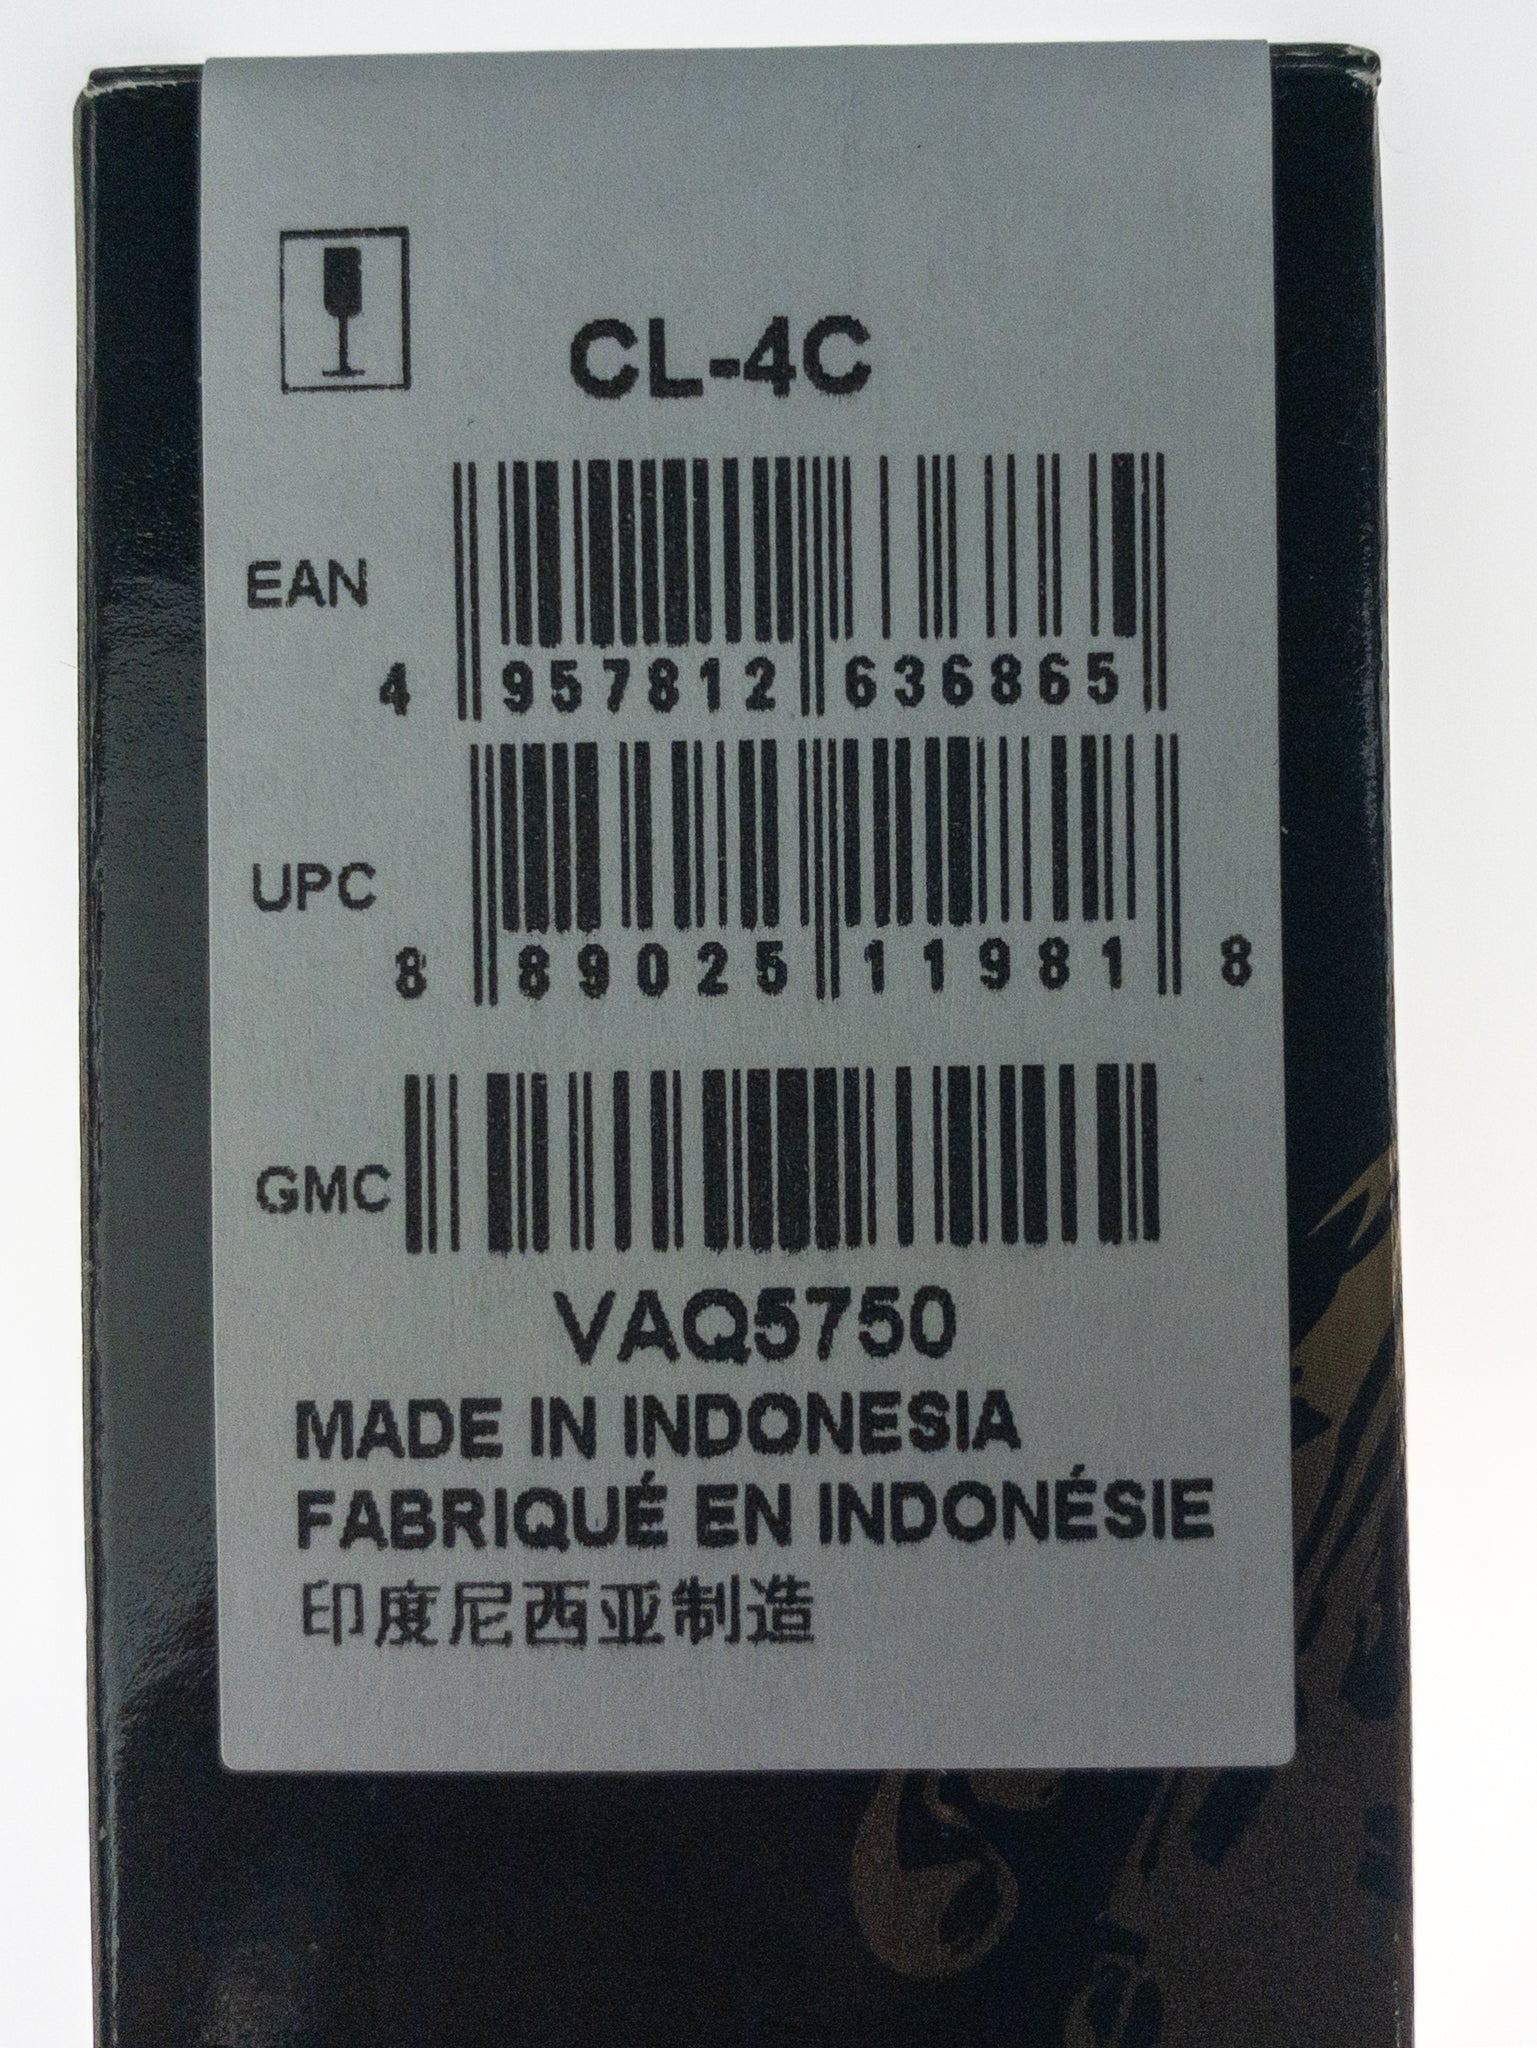 Yamaha CL4C Student Bb Clarinet Mouthpiece - Plastic #4 Facing